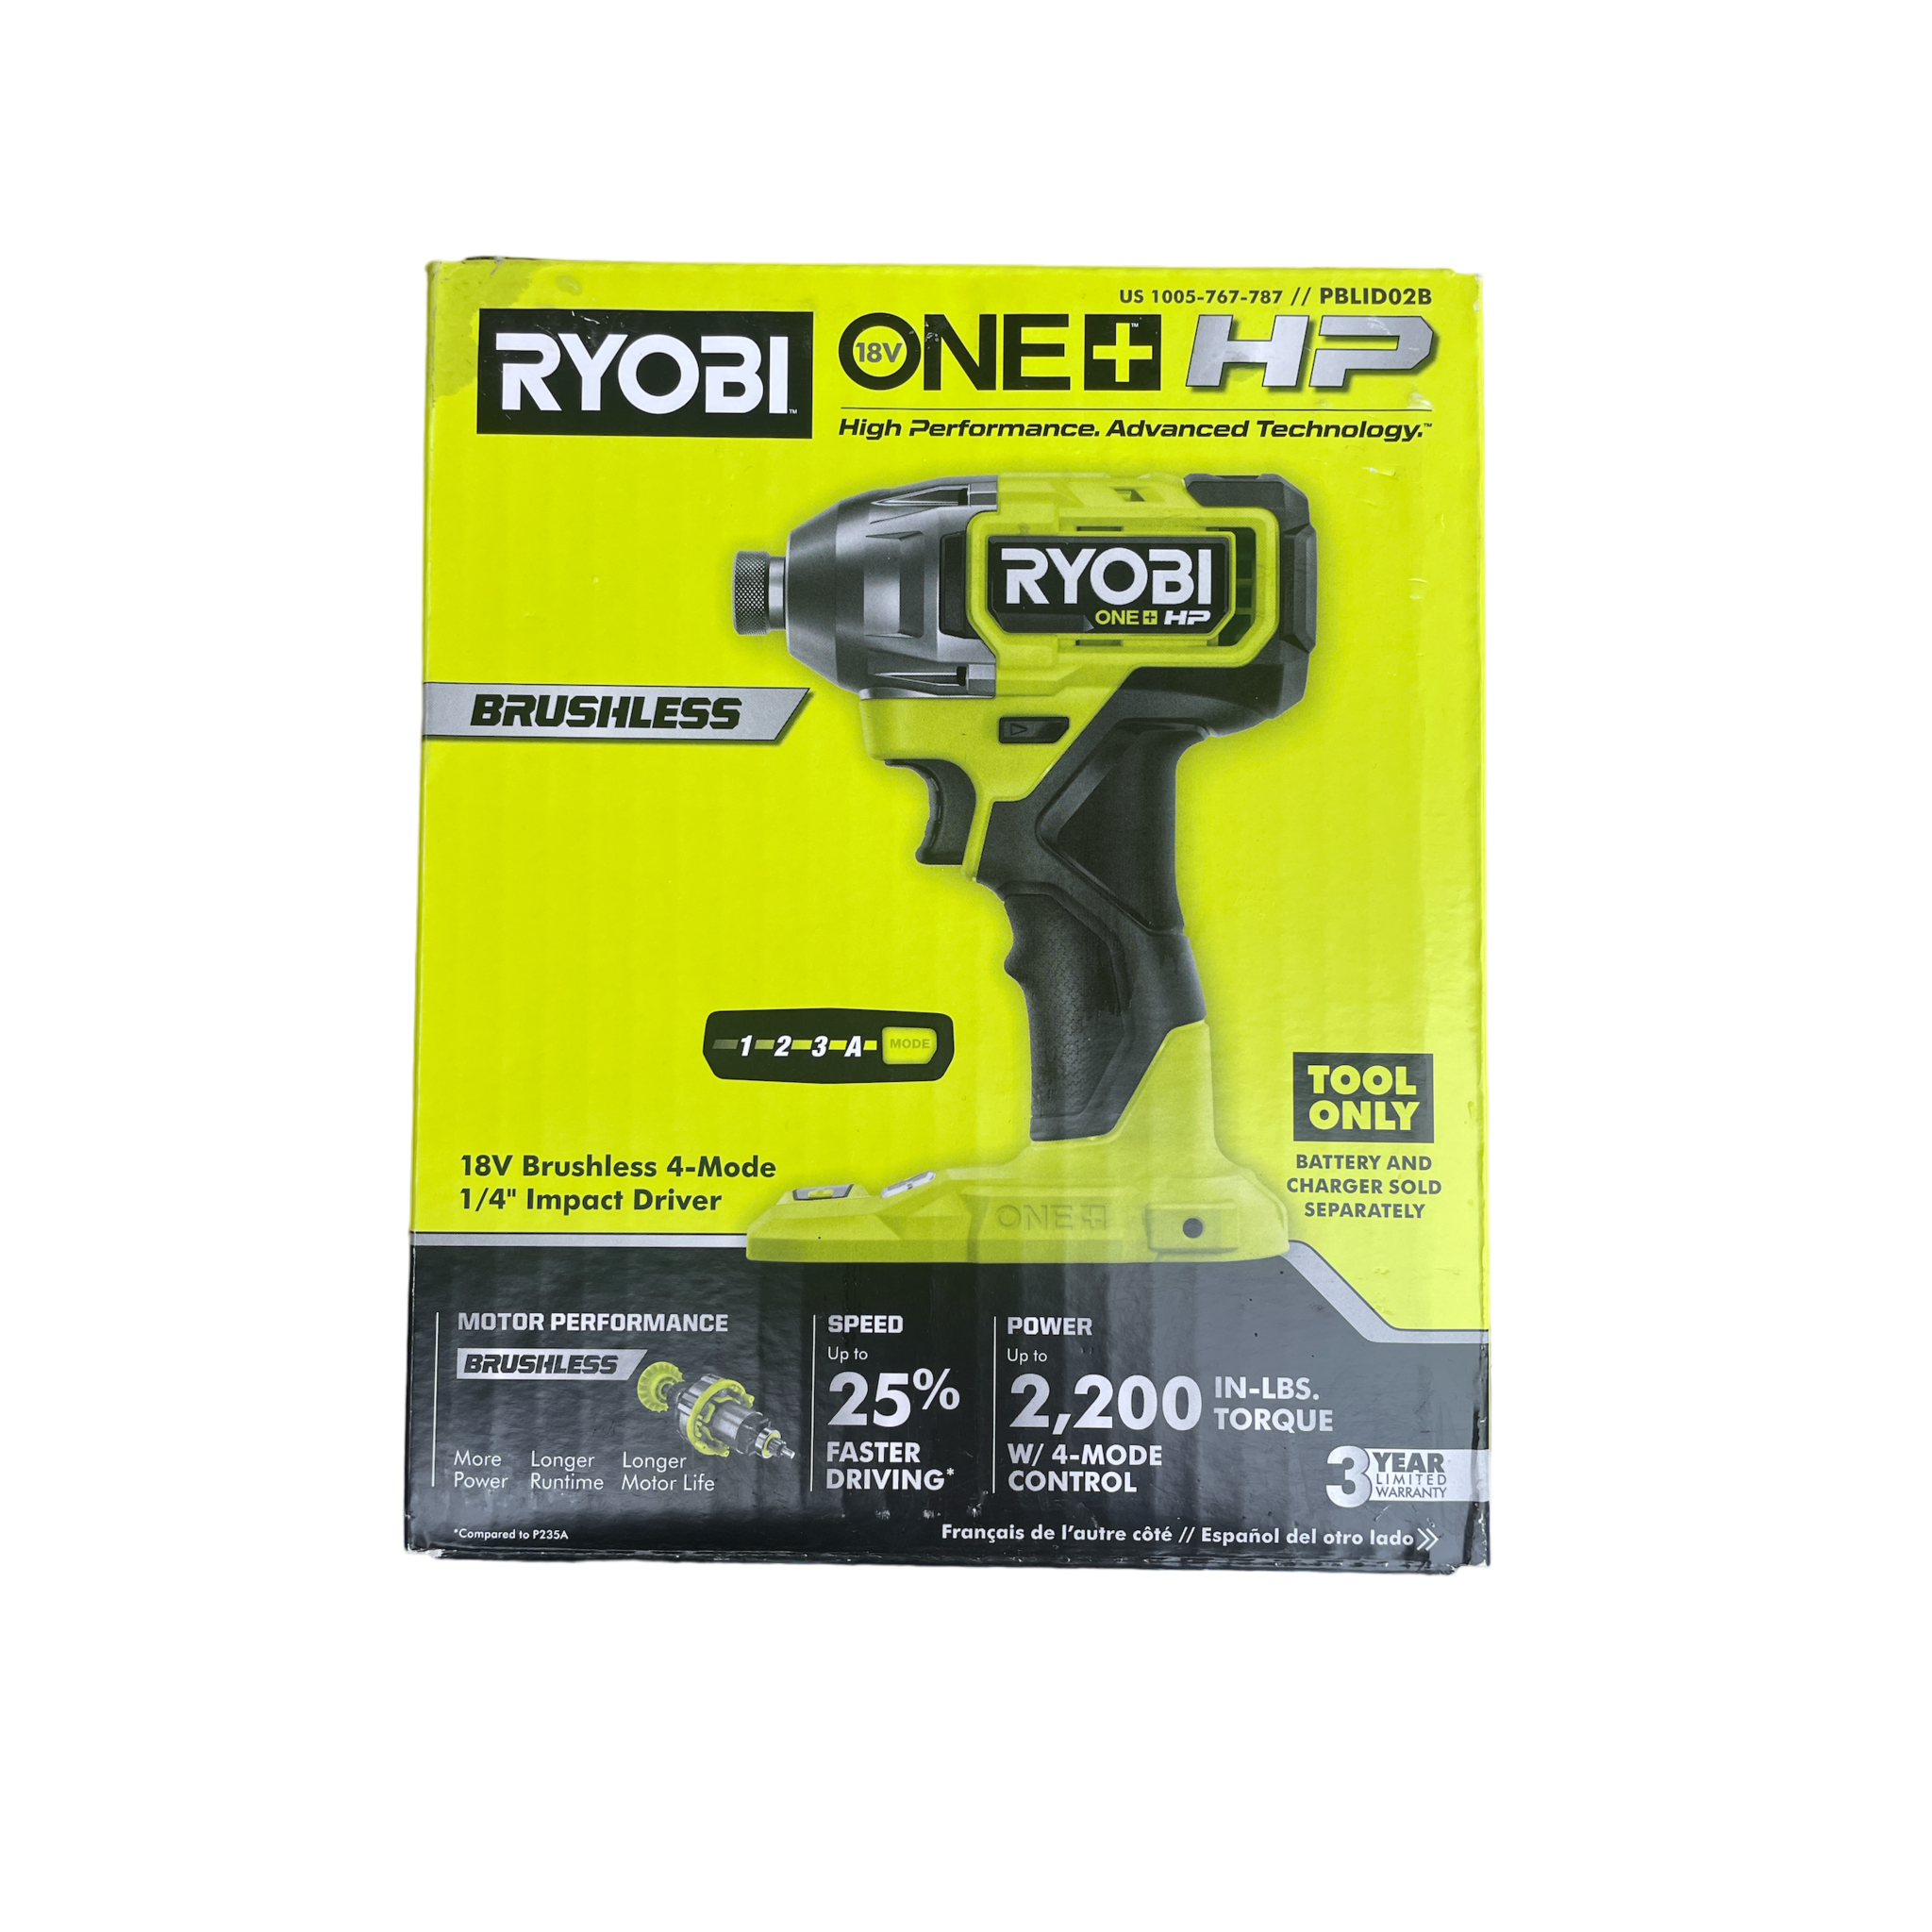 18V ONE+ HP COMPACT BRUSHLESS 4-MODE 1/2 IMPACT - RYOBI Tools